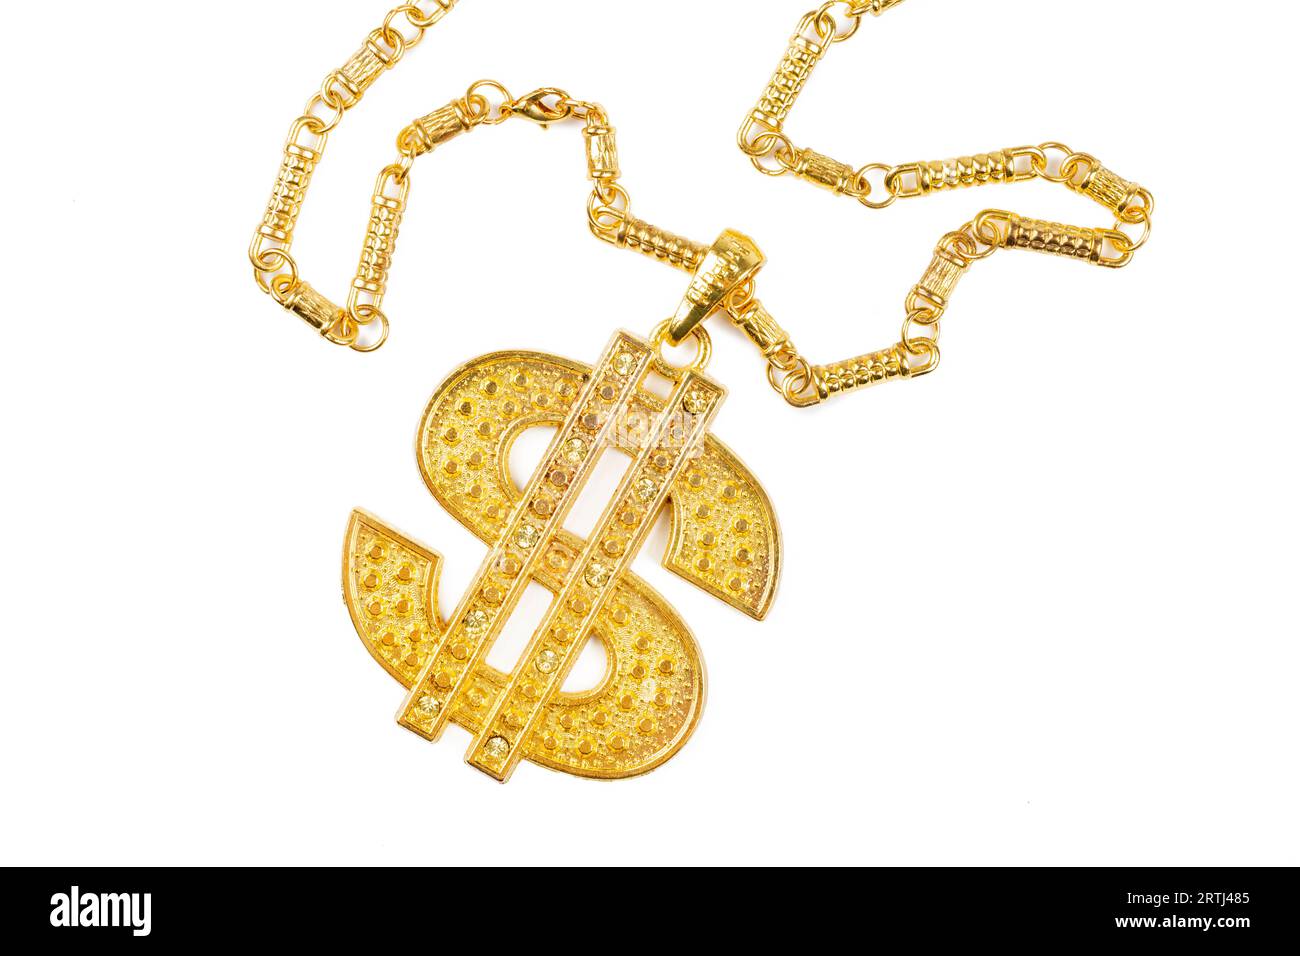 Gold dollar necklace on white background Stock Photo